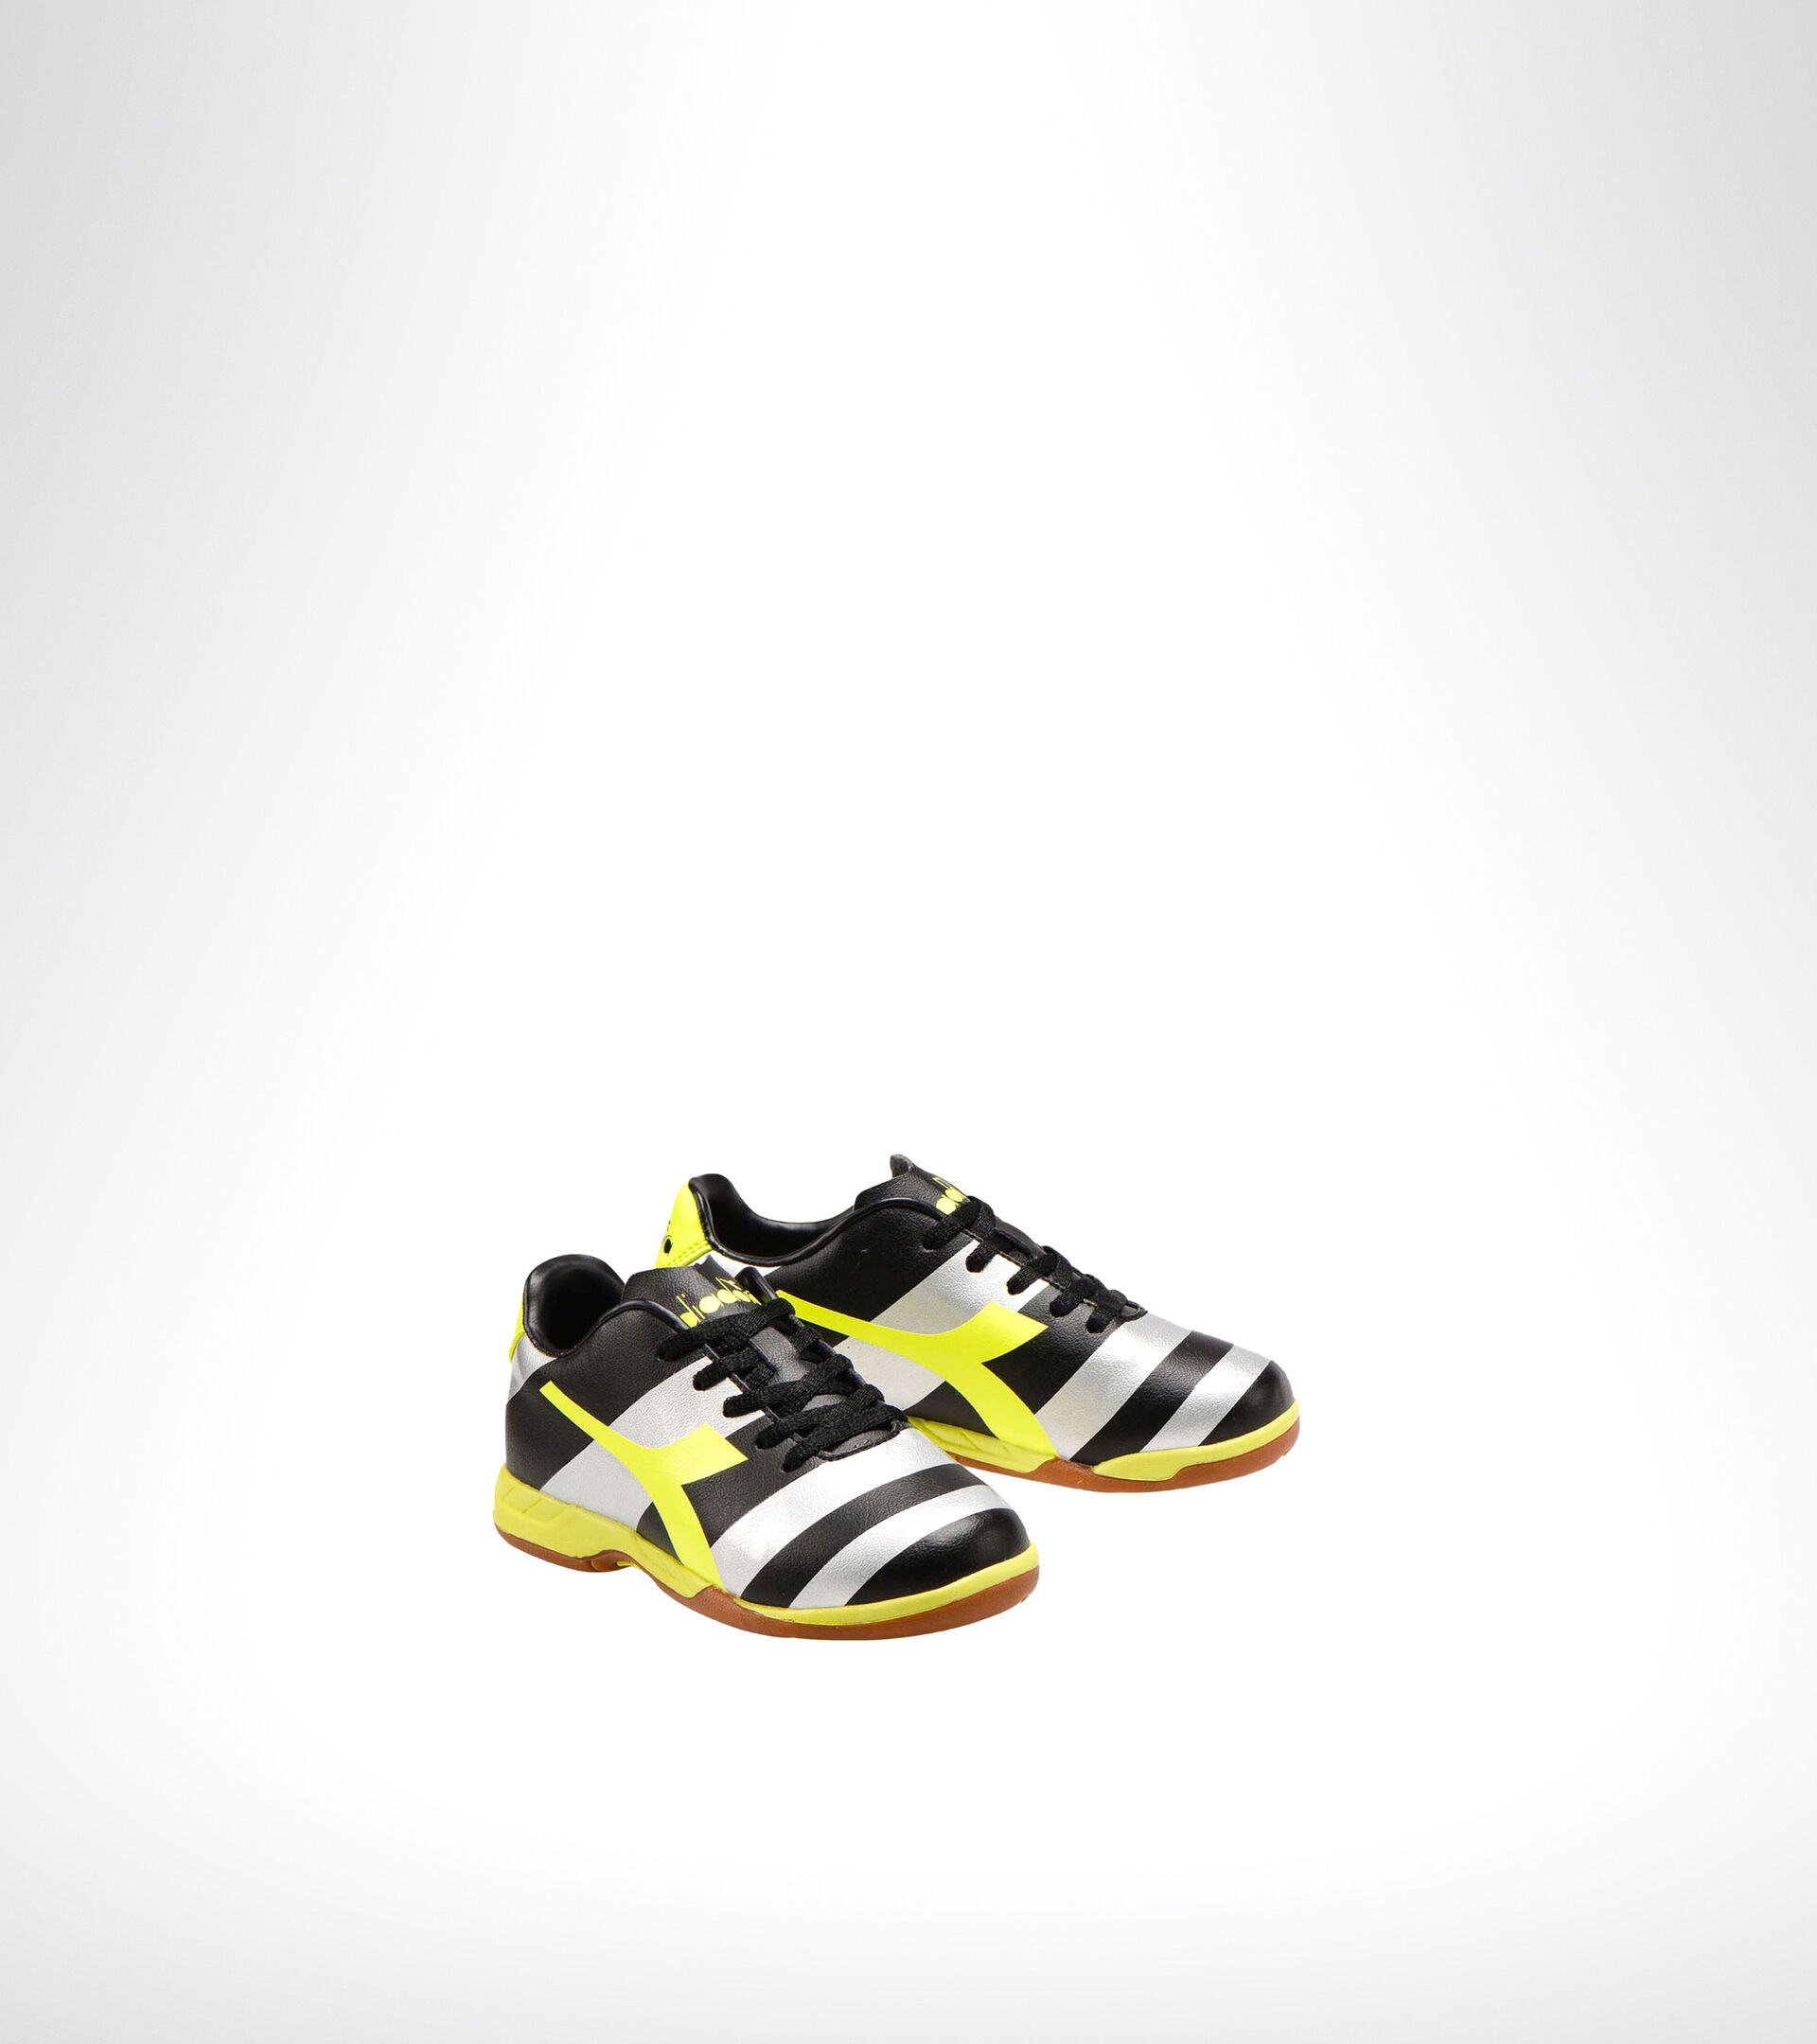 Chaussures de football pour salle - Unisexe Enfant RAPTOR R ID JR NERO/ARGENTO/GIALLO FL DD - Diadora